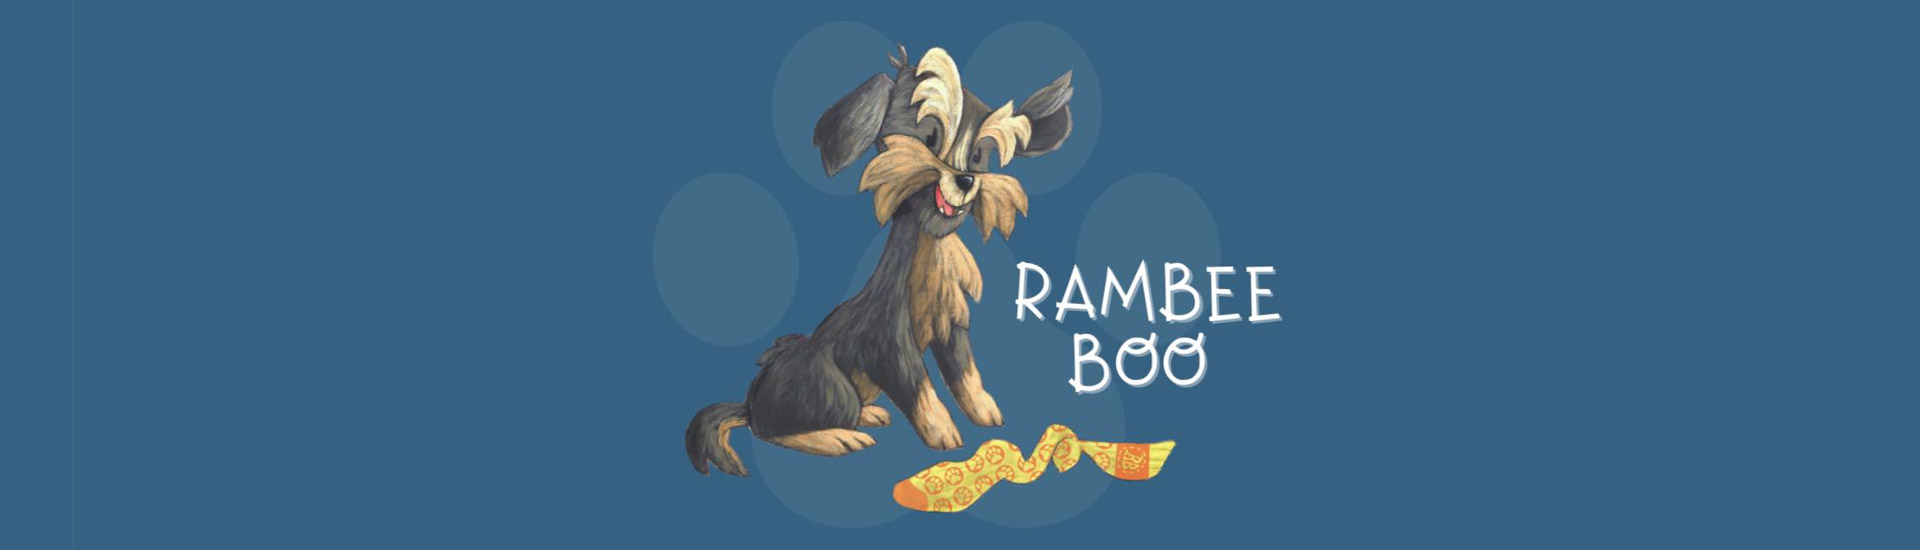 Rambee Boo